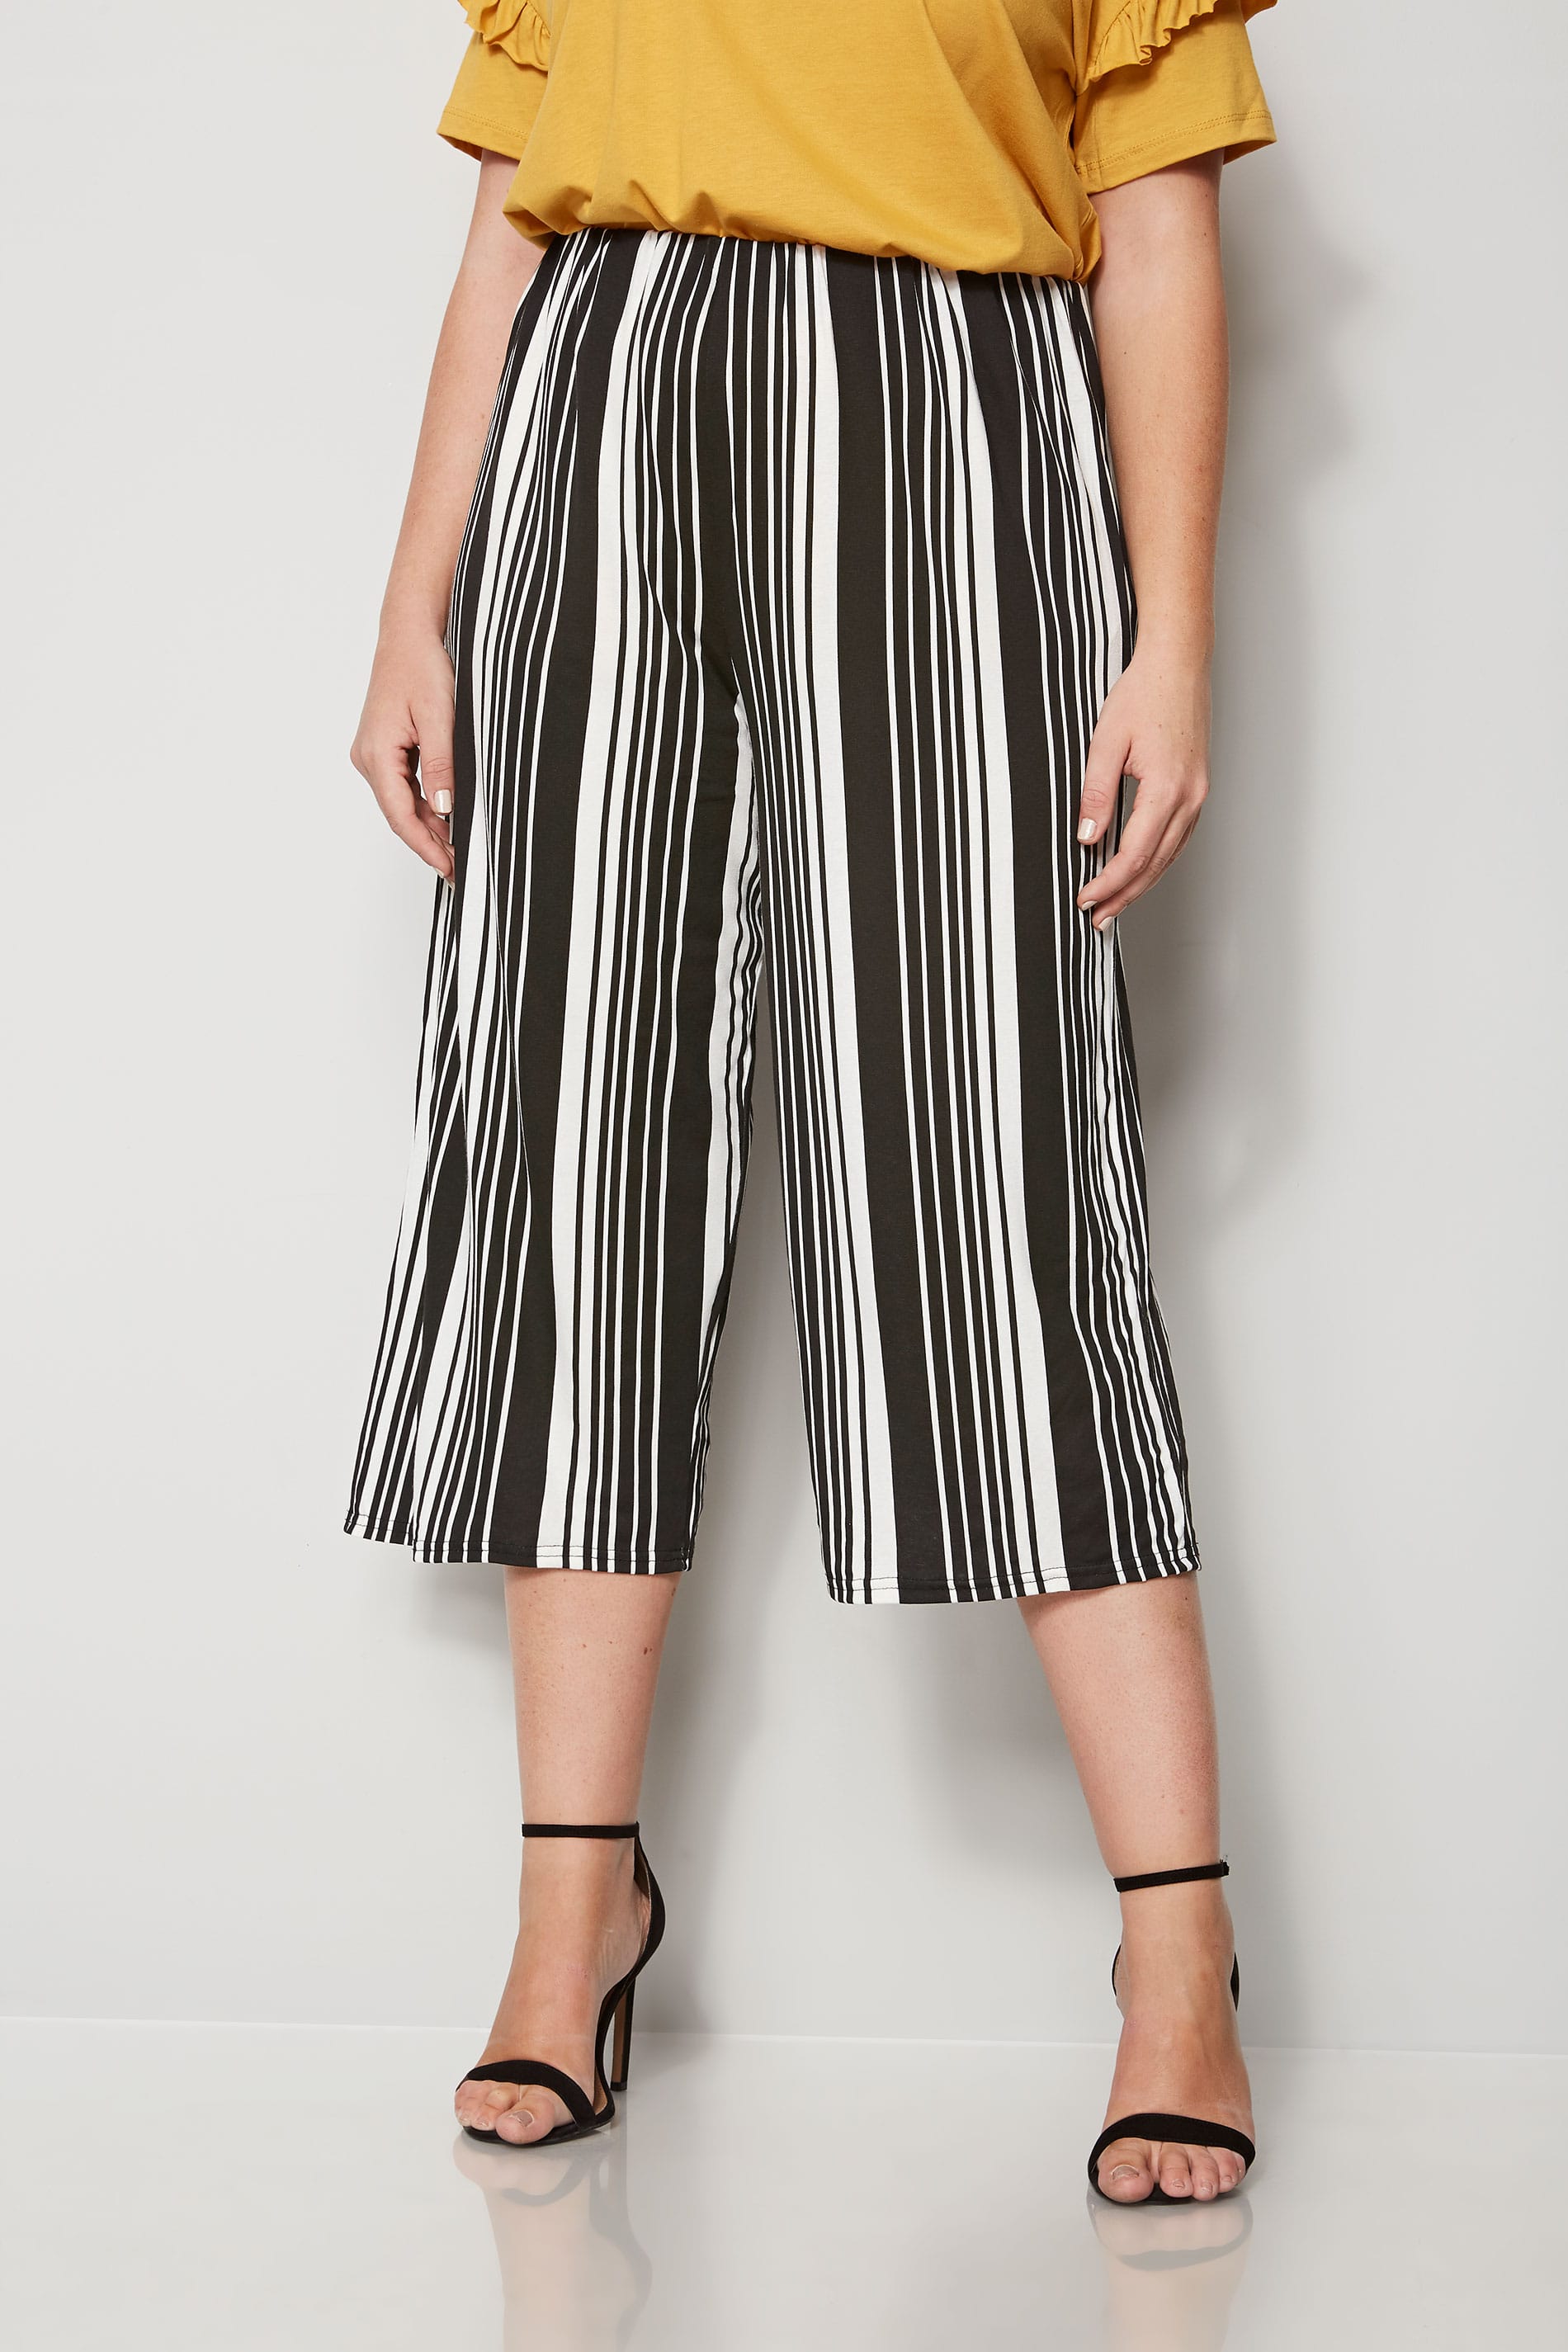 Black & White Striped Culottes, plus size 16 to 36